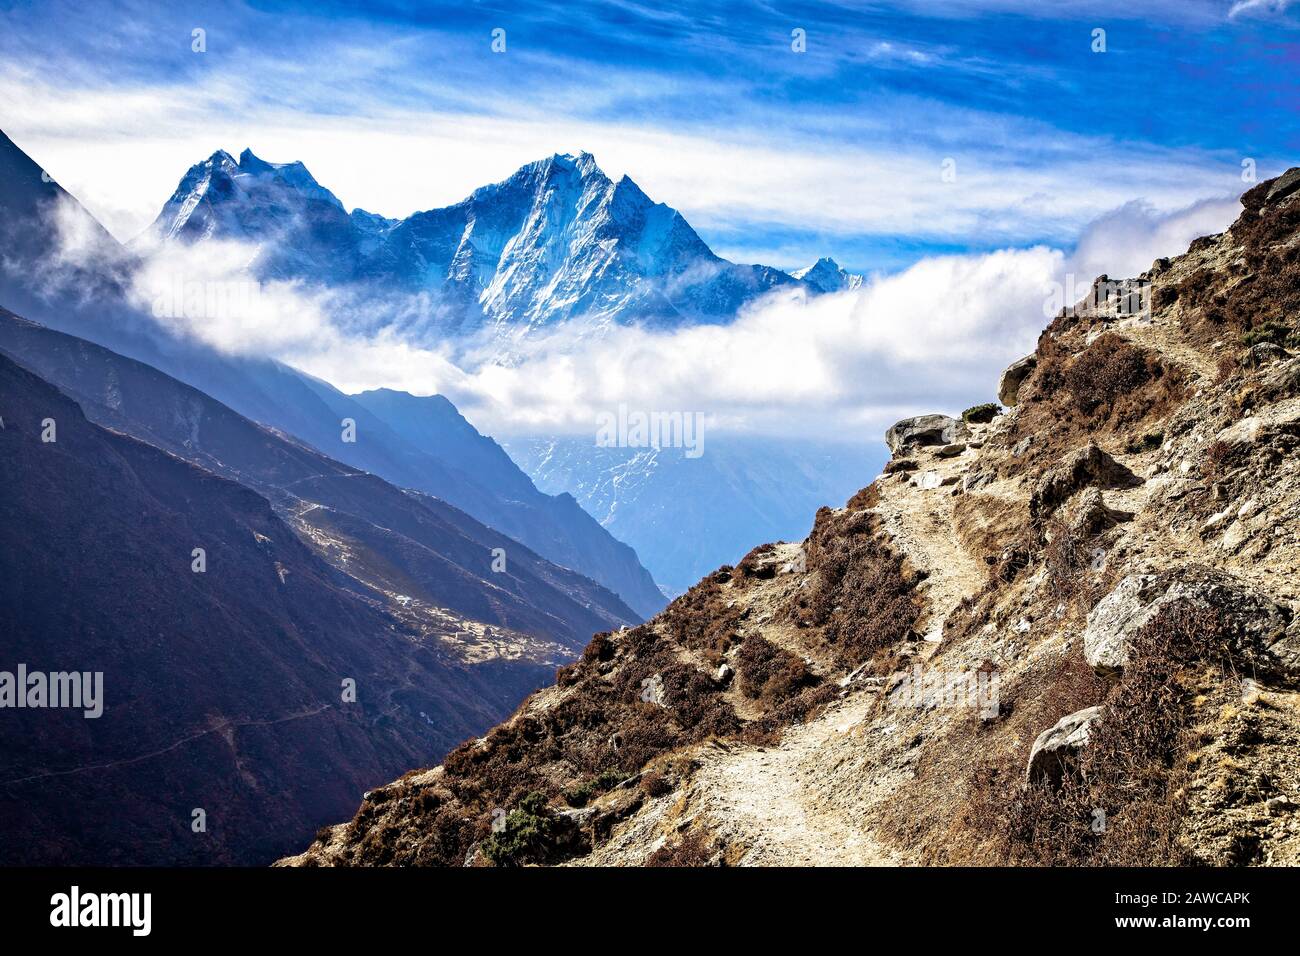 The trail to Gokyo with Kangtega (6685 meters) and Thamserku (6608 meters) in the background.  Sagarmatha National Park, Nepal. Stock Photo